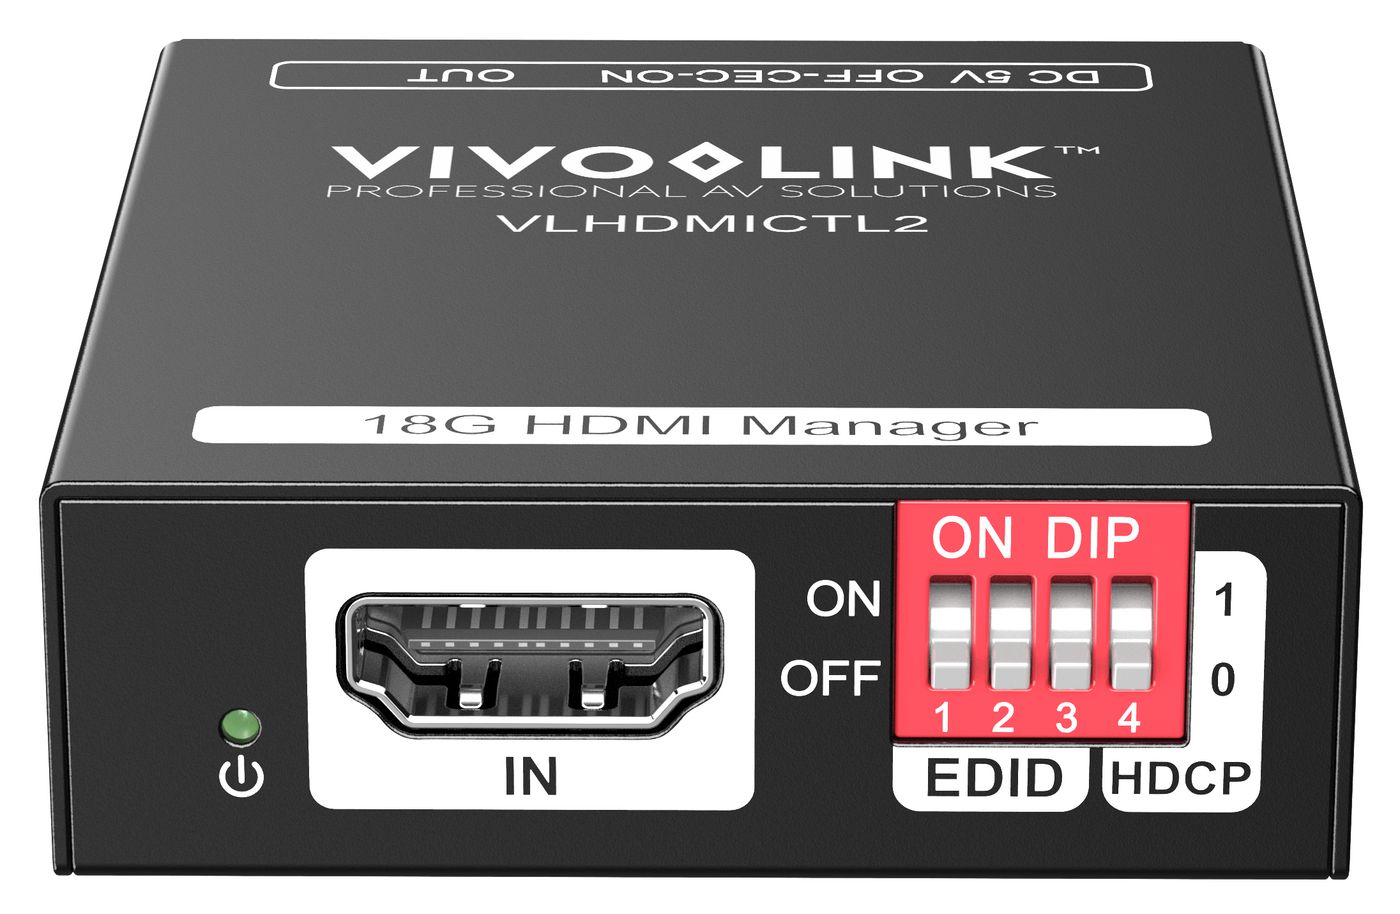 Vivolink VLHDMICTL2 W127247504 18G HDMI EDID Manager 